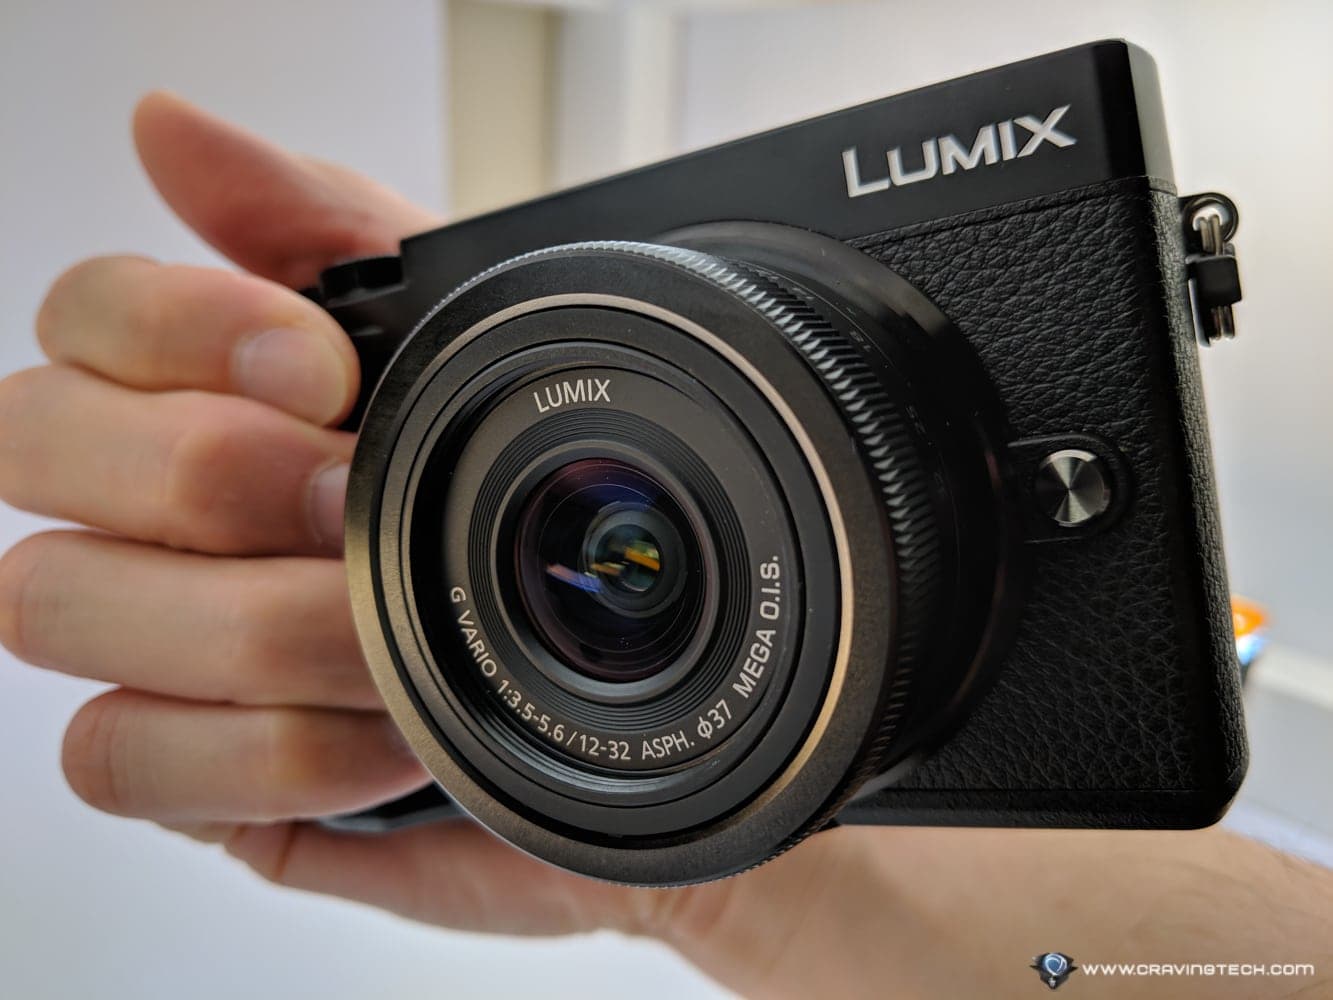 Introducing Panasonic LUMIX GX9 